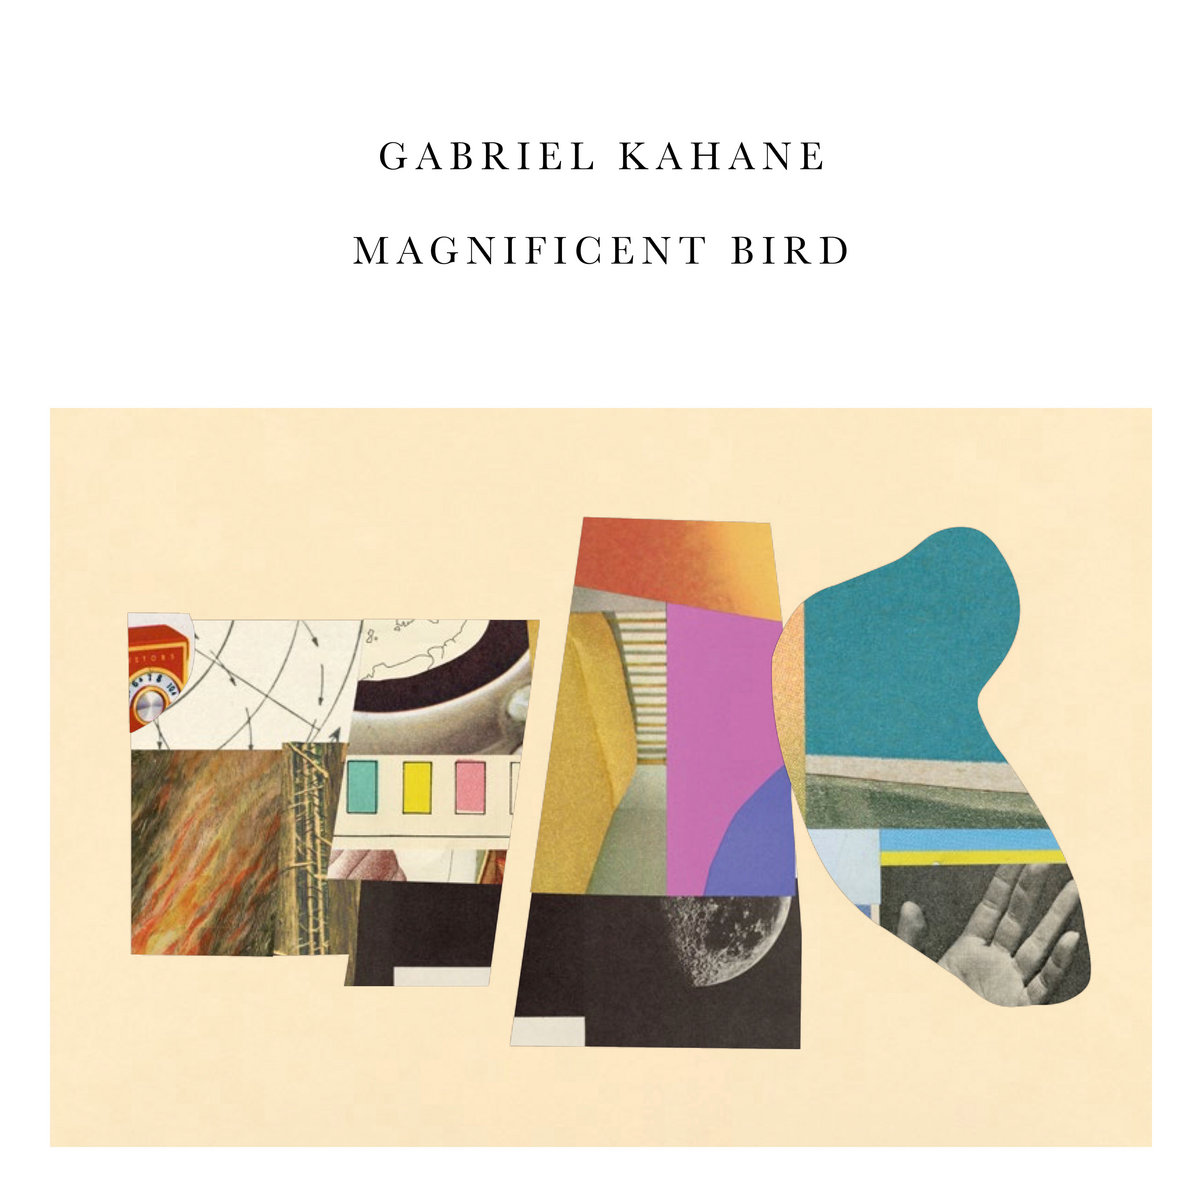 Gabriel Kahane's Magnificent Bird album cover